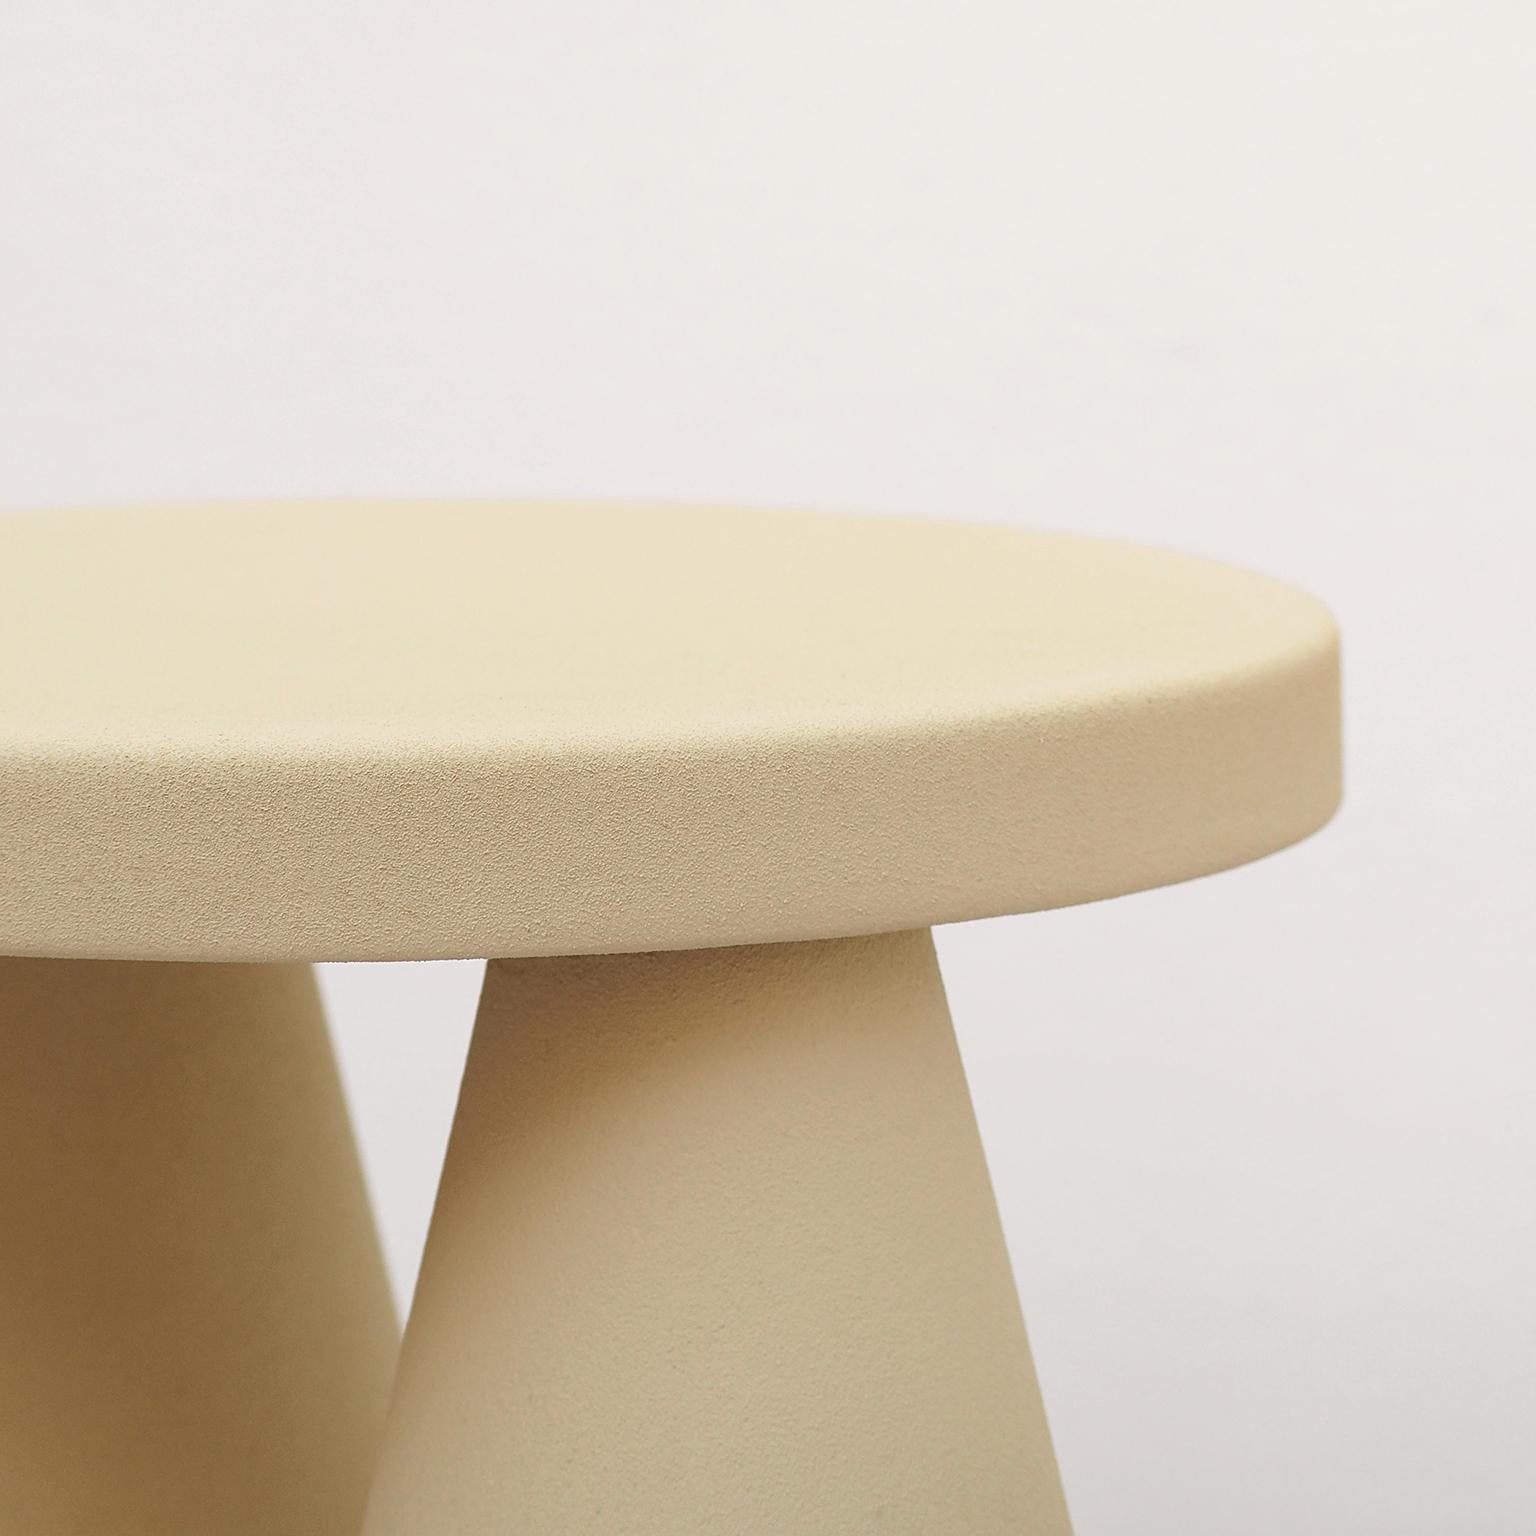 Italian Isola/ Ceramic Conic Side Table/ Honey, Designed by Cara/Davide for Portego